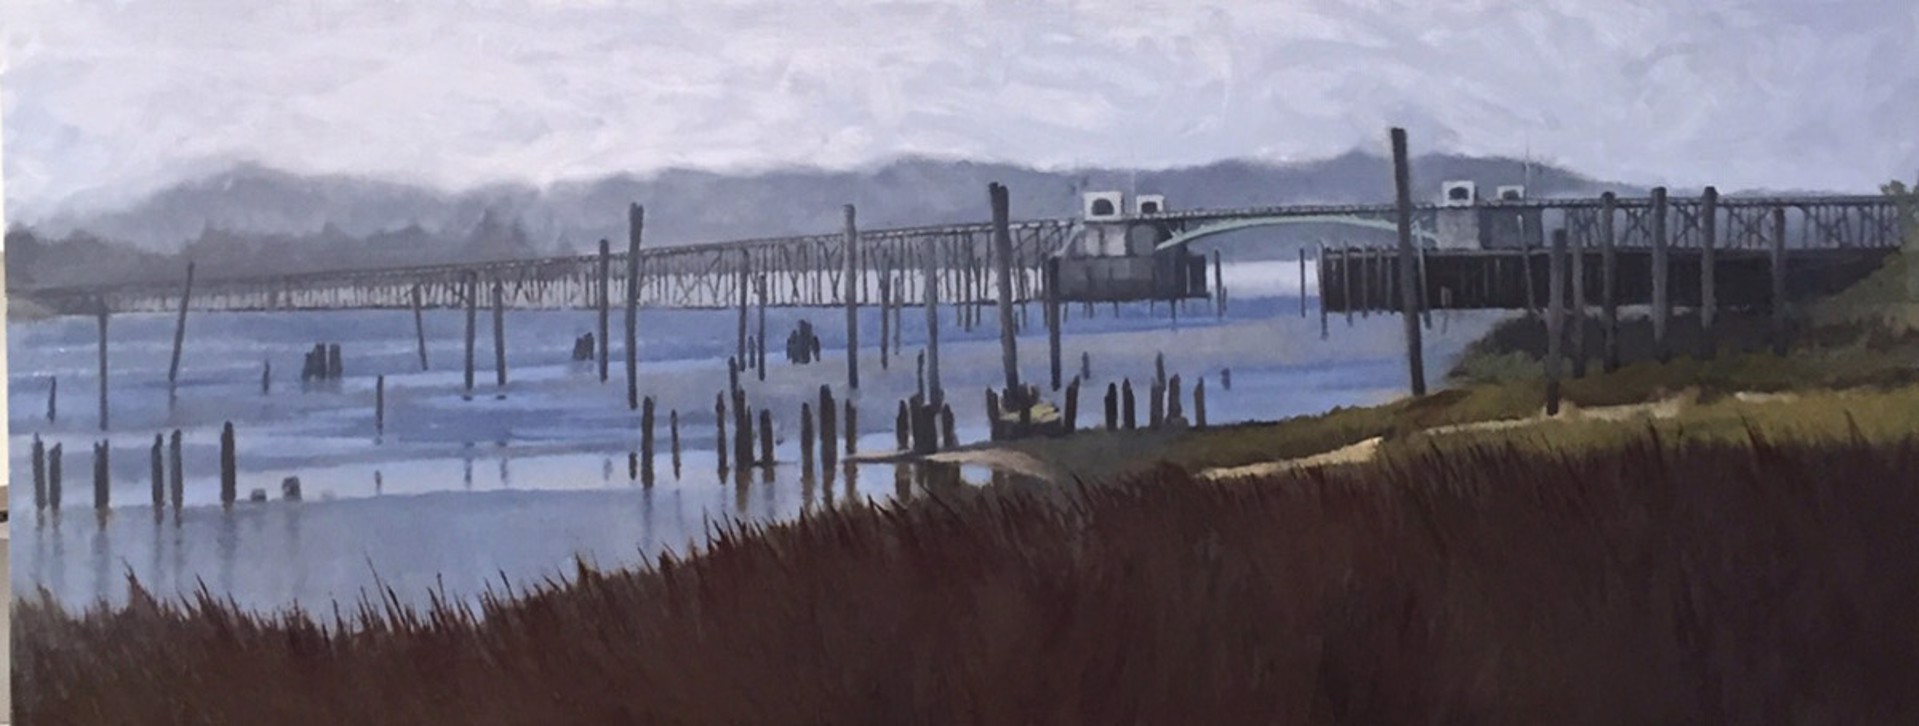 Old Youngs Bay Bridge, Low Tide by Robert Paulmenn